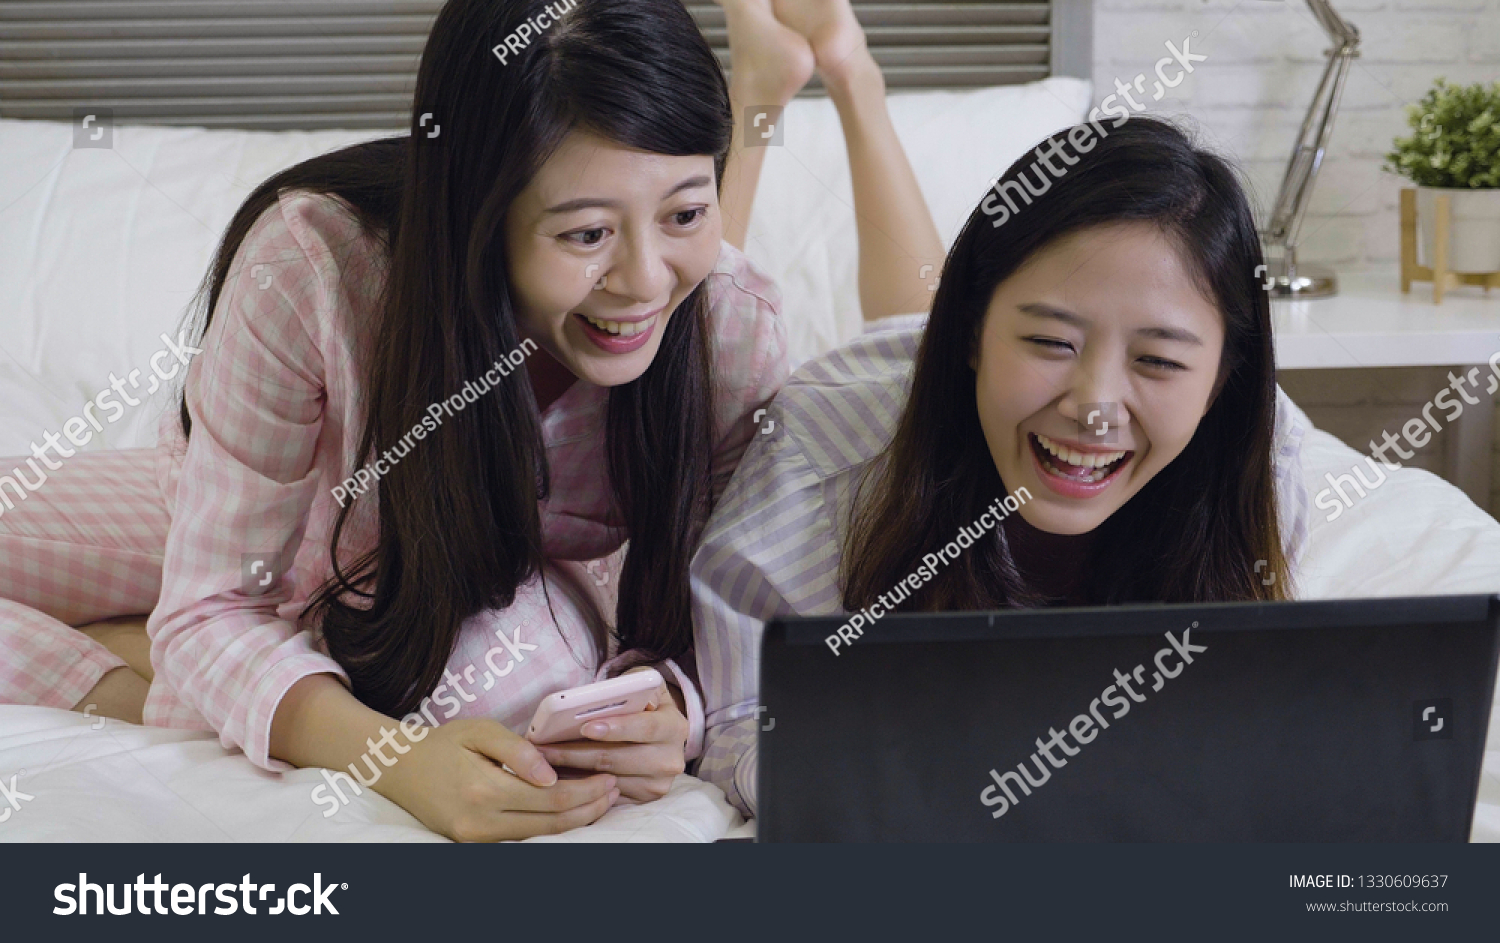 Nice Japanese lesbian broads having fun together